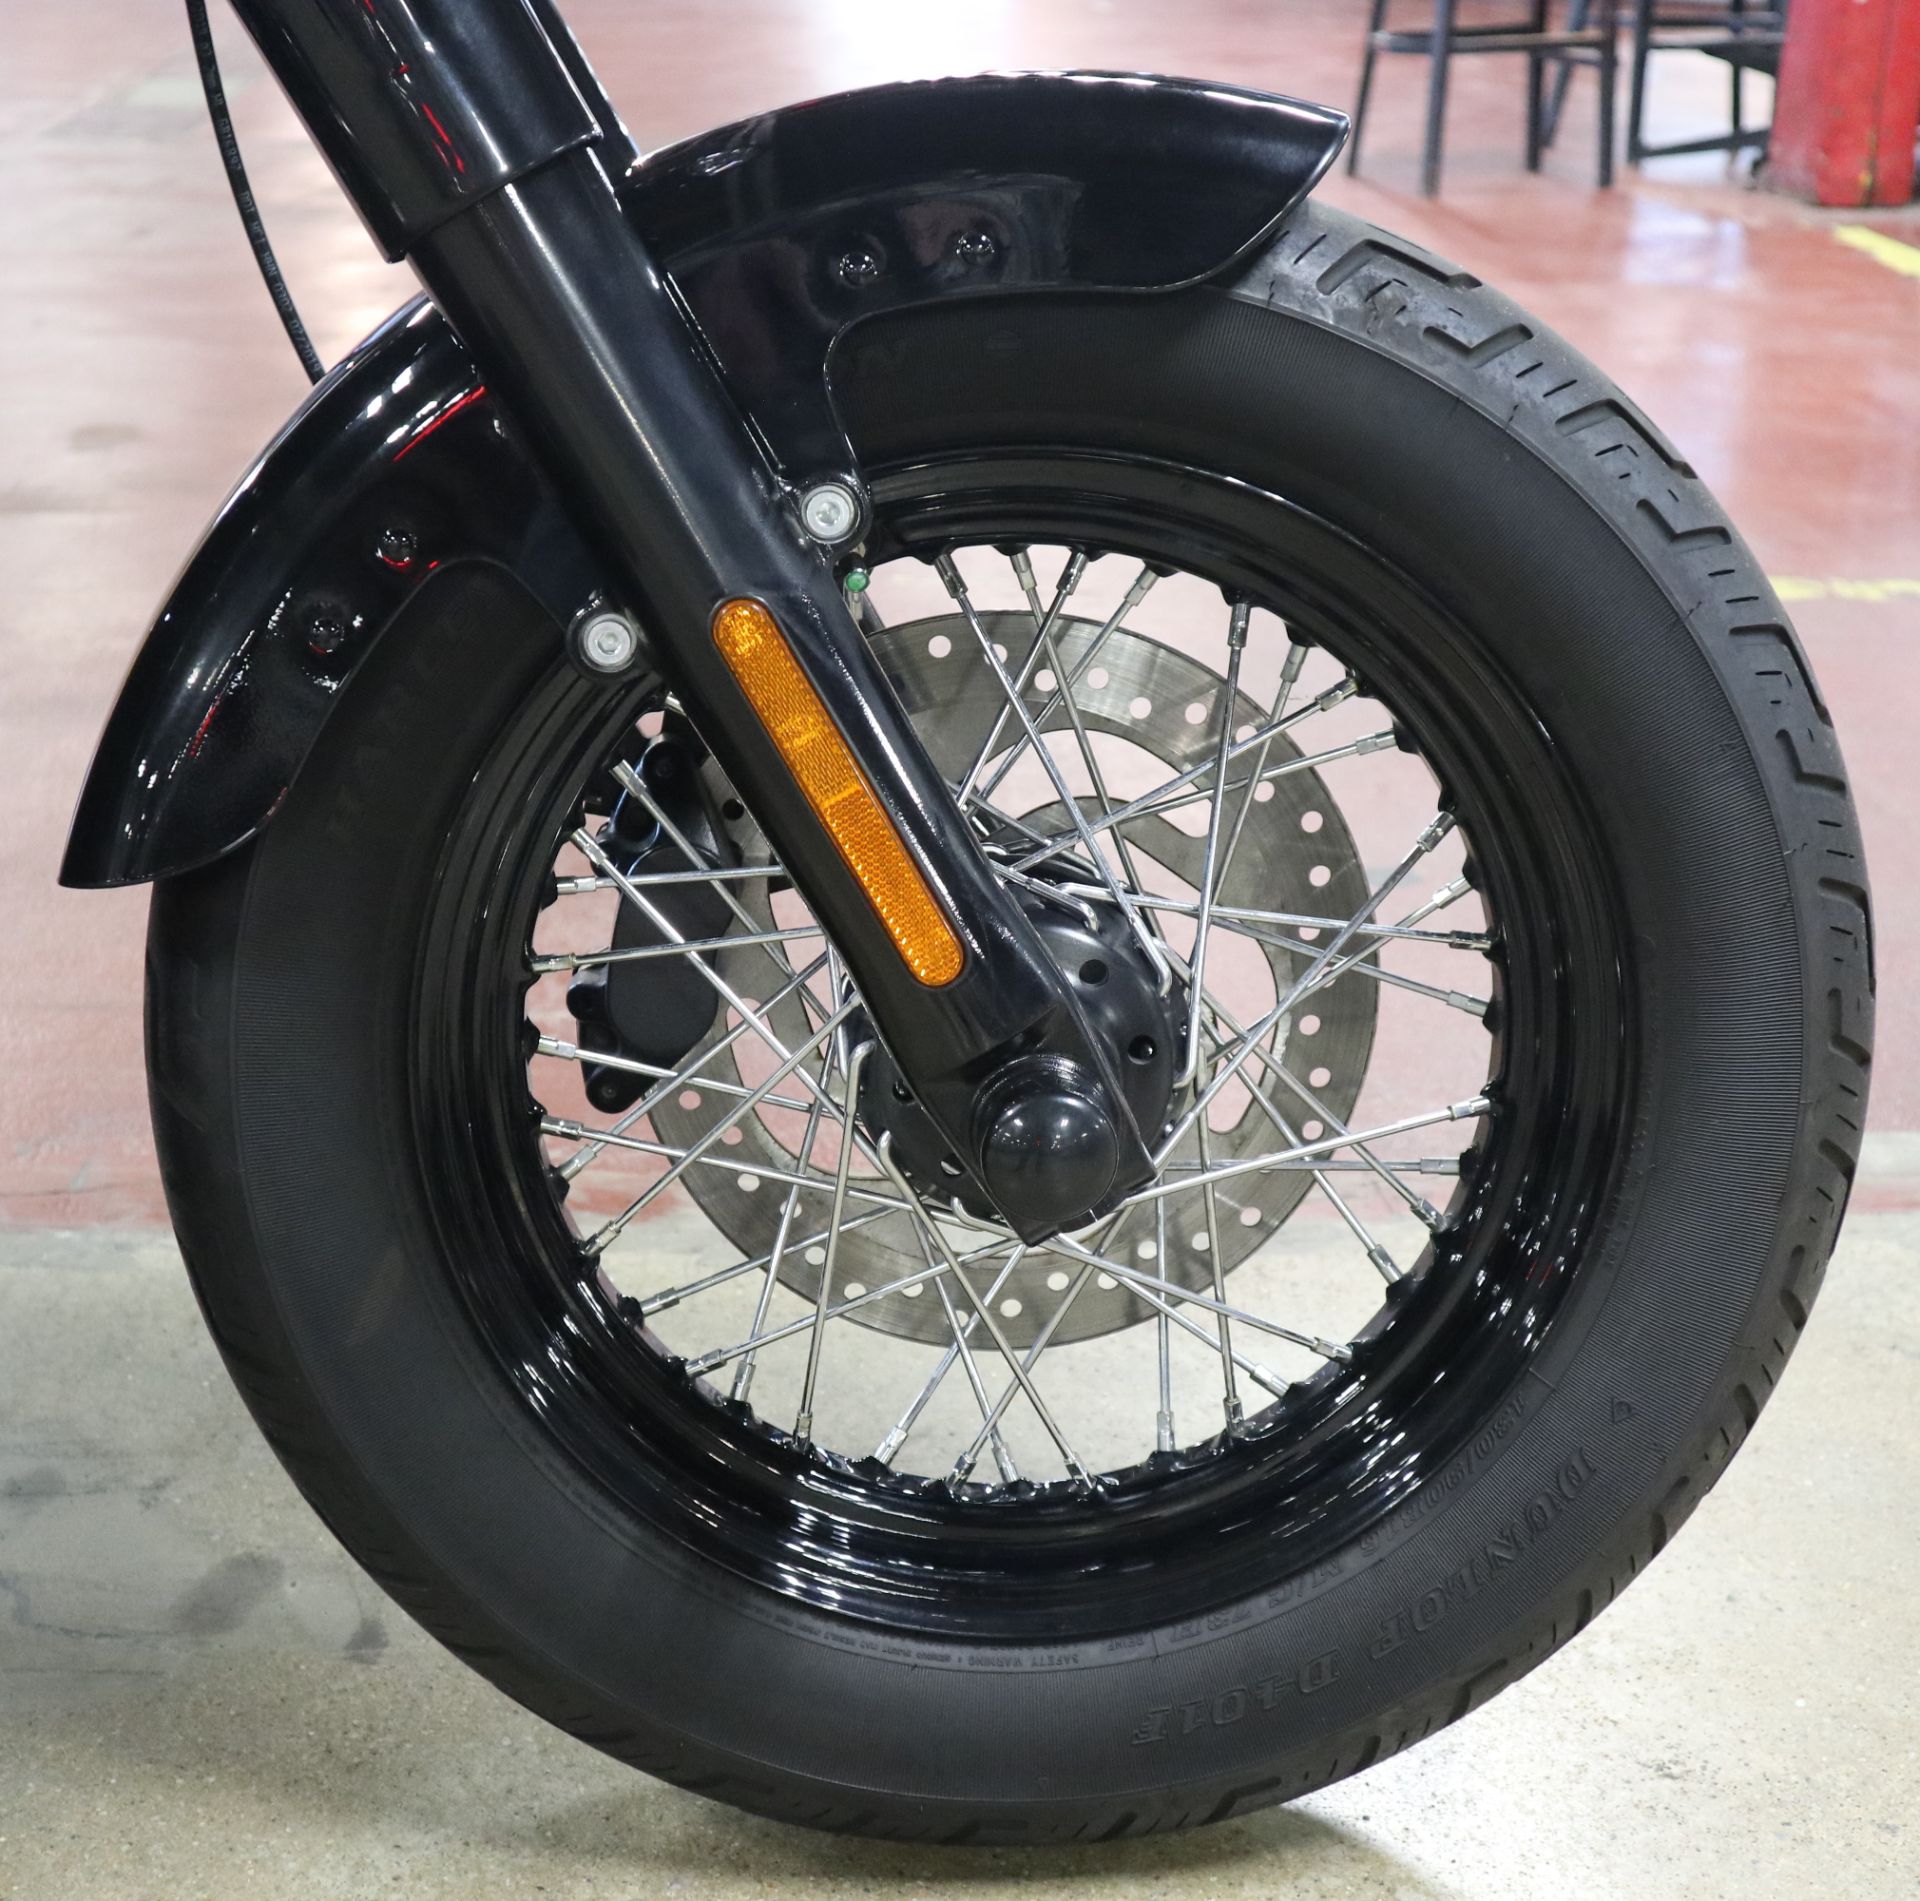 2020 Harley-Davidson Softail Slim® in New London, Connecticut - Photo 13